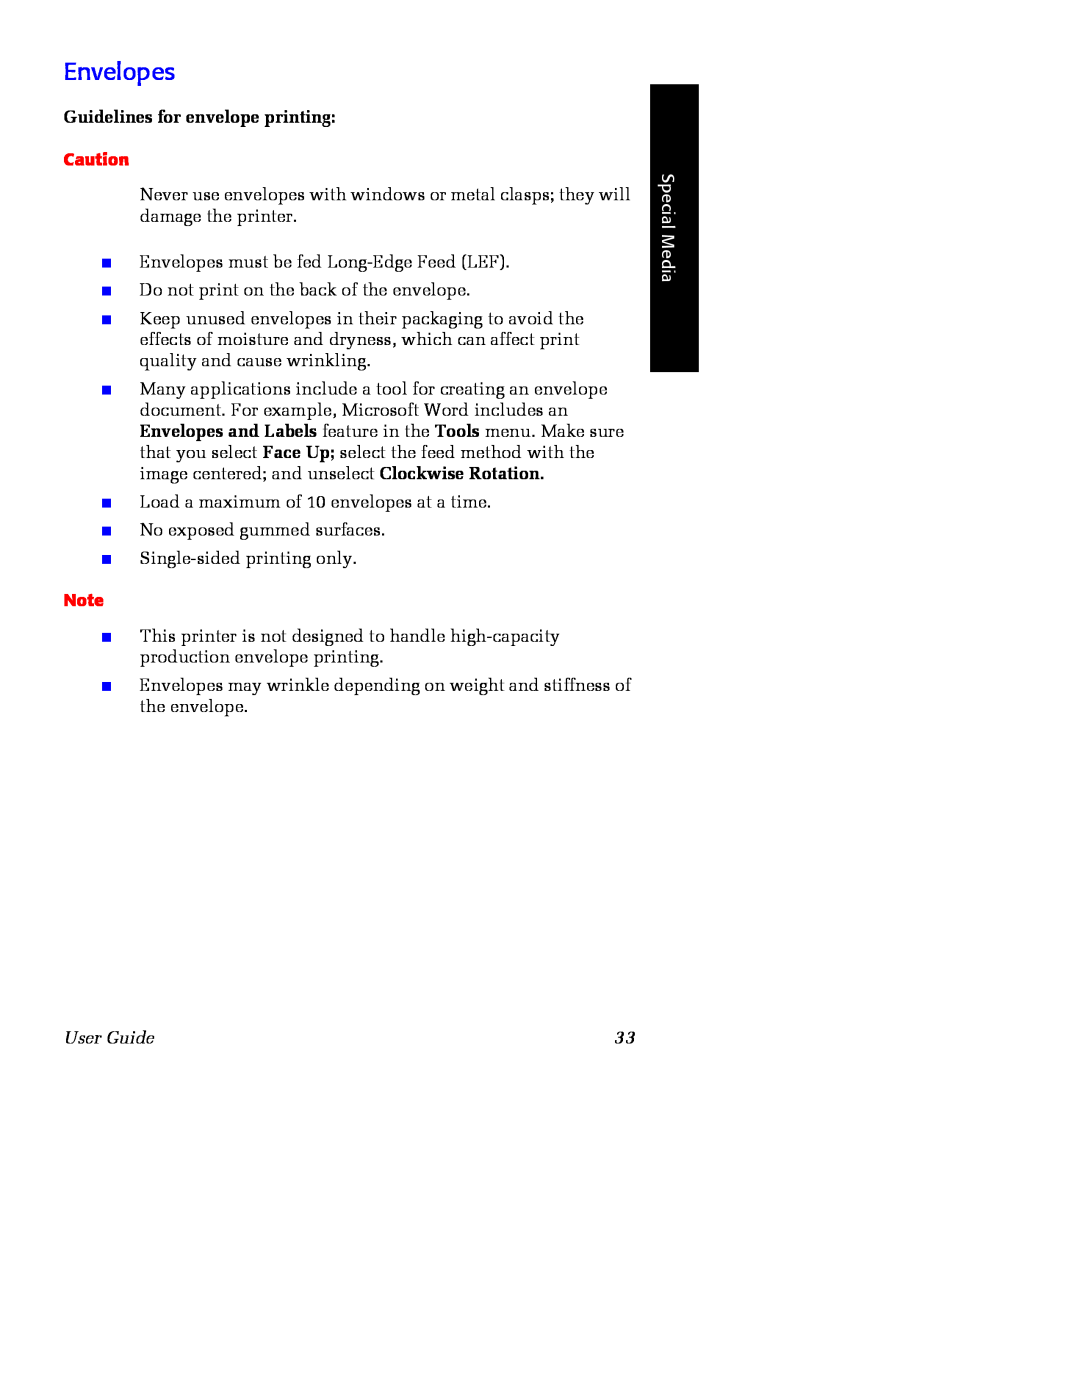 Xerox Phaser 2135 manual Envelopes, Guidelines for envelope printing, Special Media, User Guide 